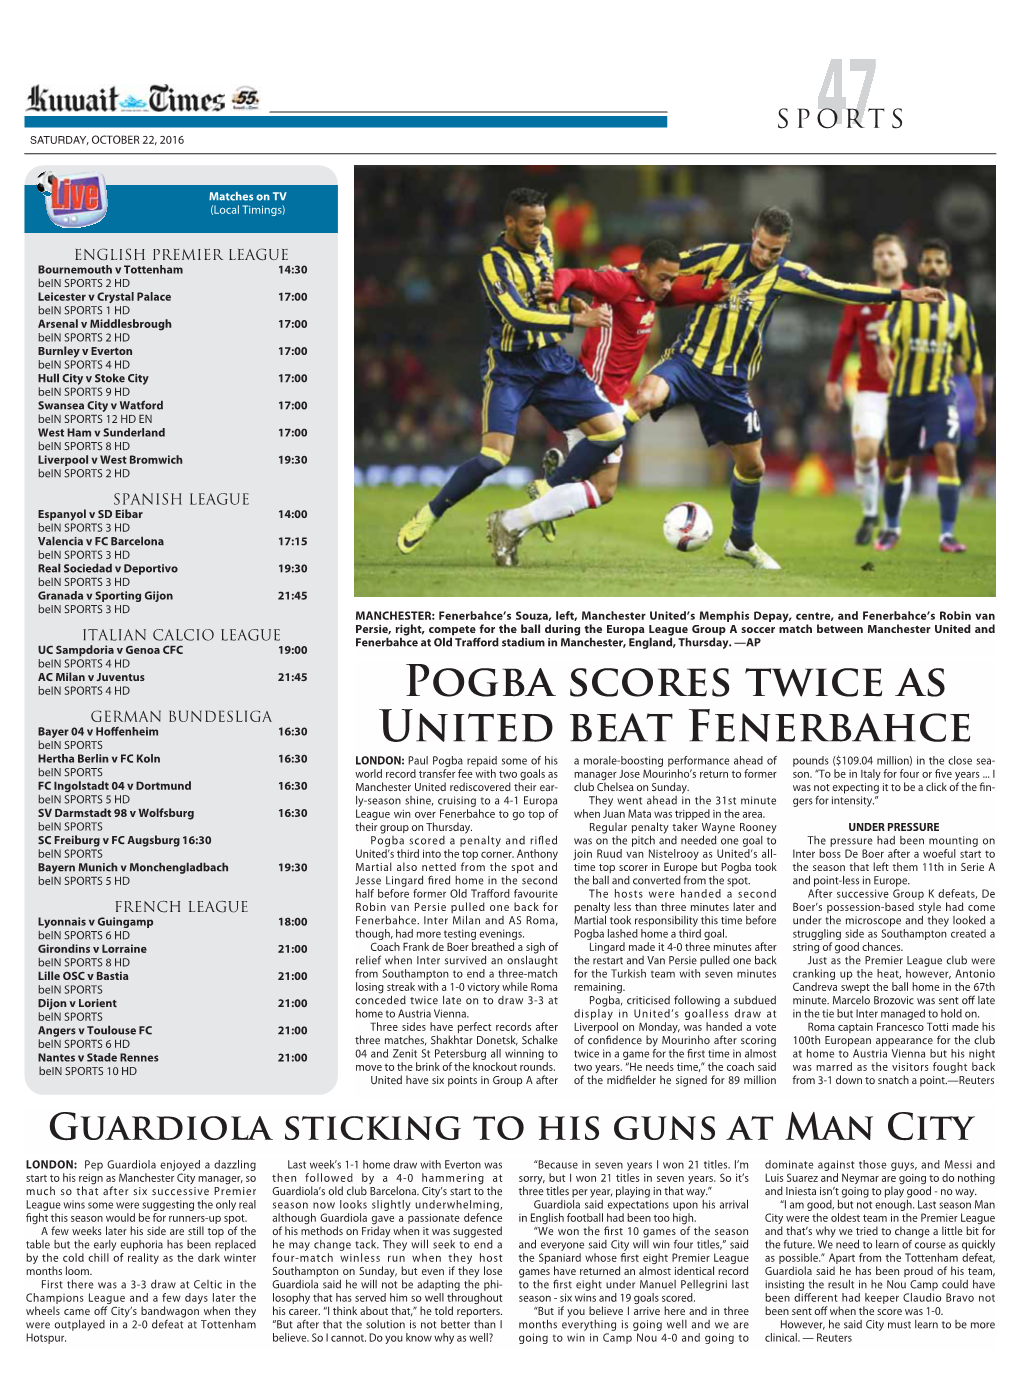 Pogba Scores Twice As United Beat Fenerbahce